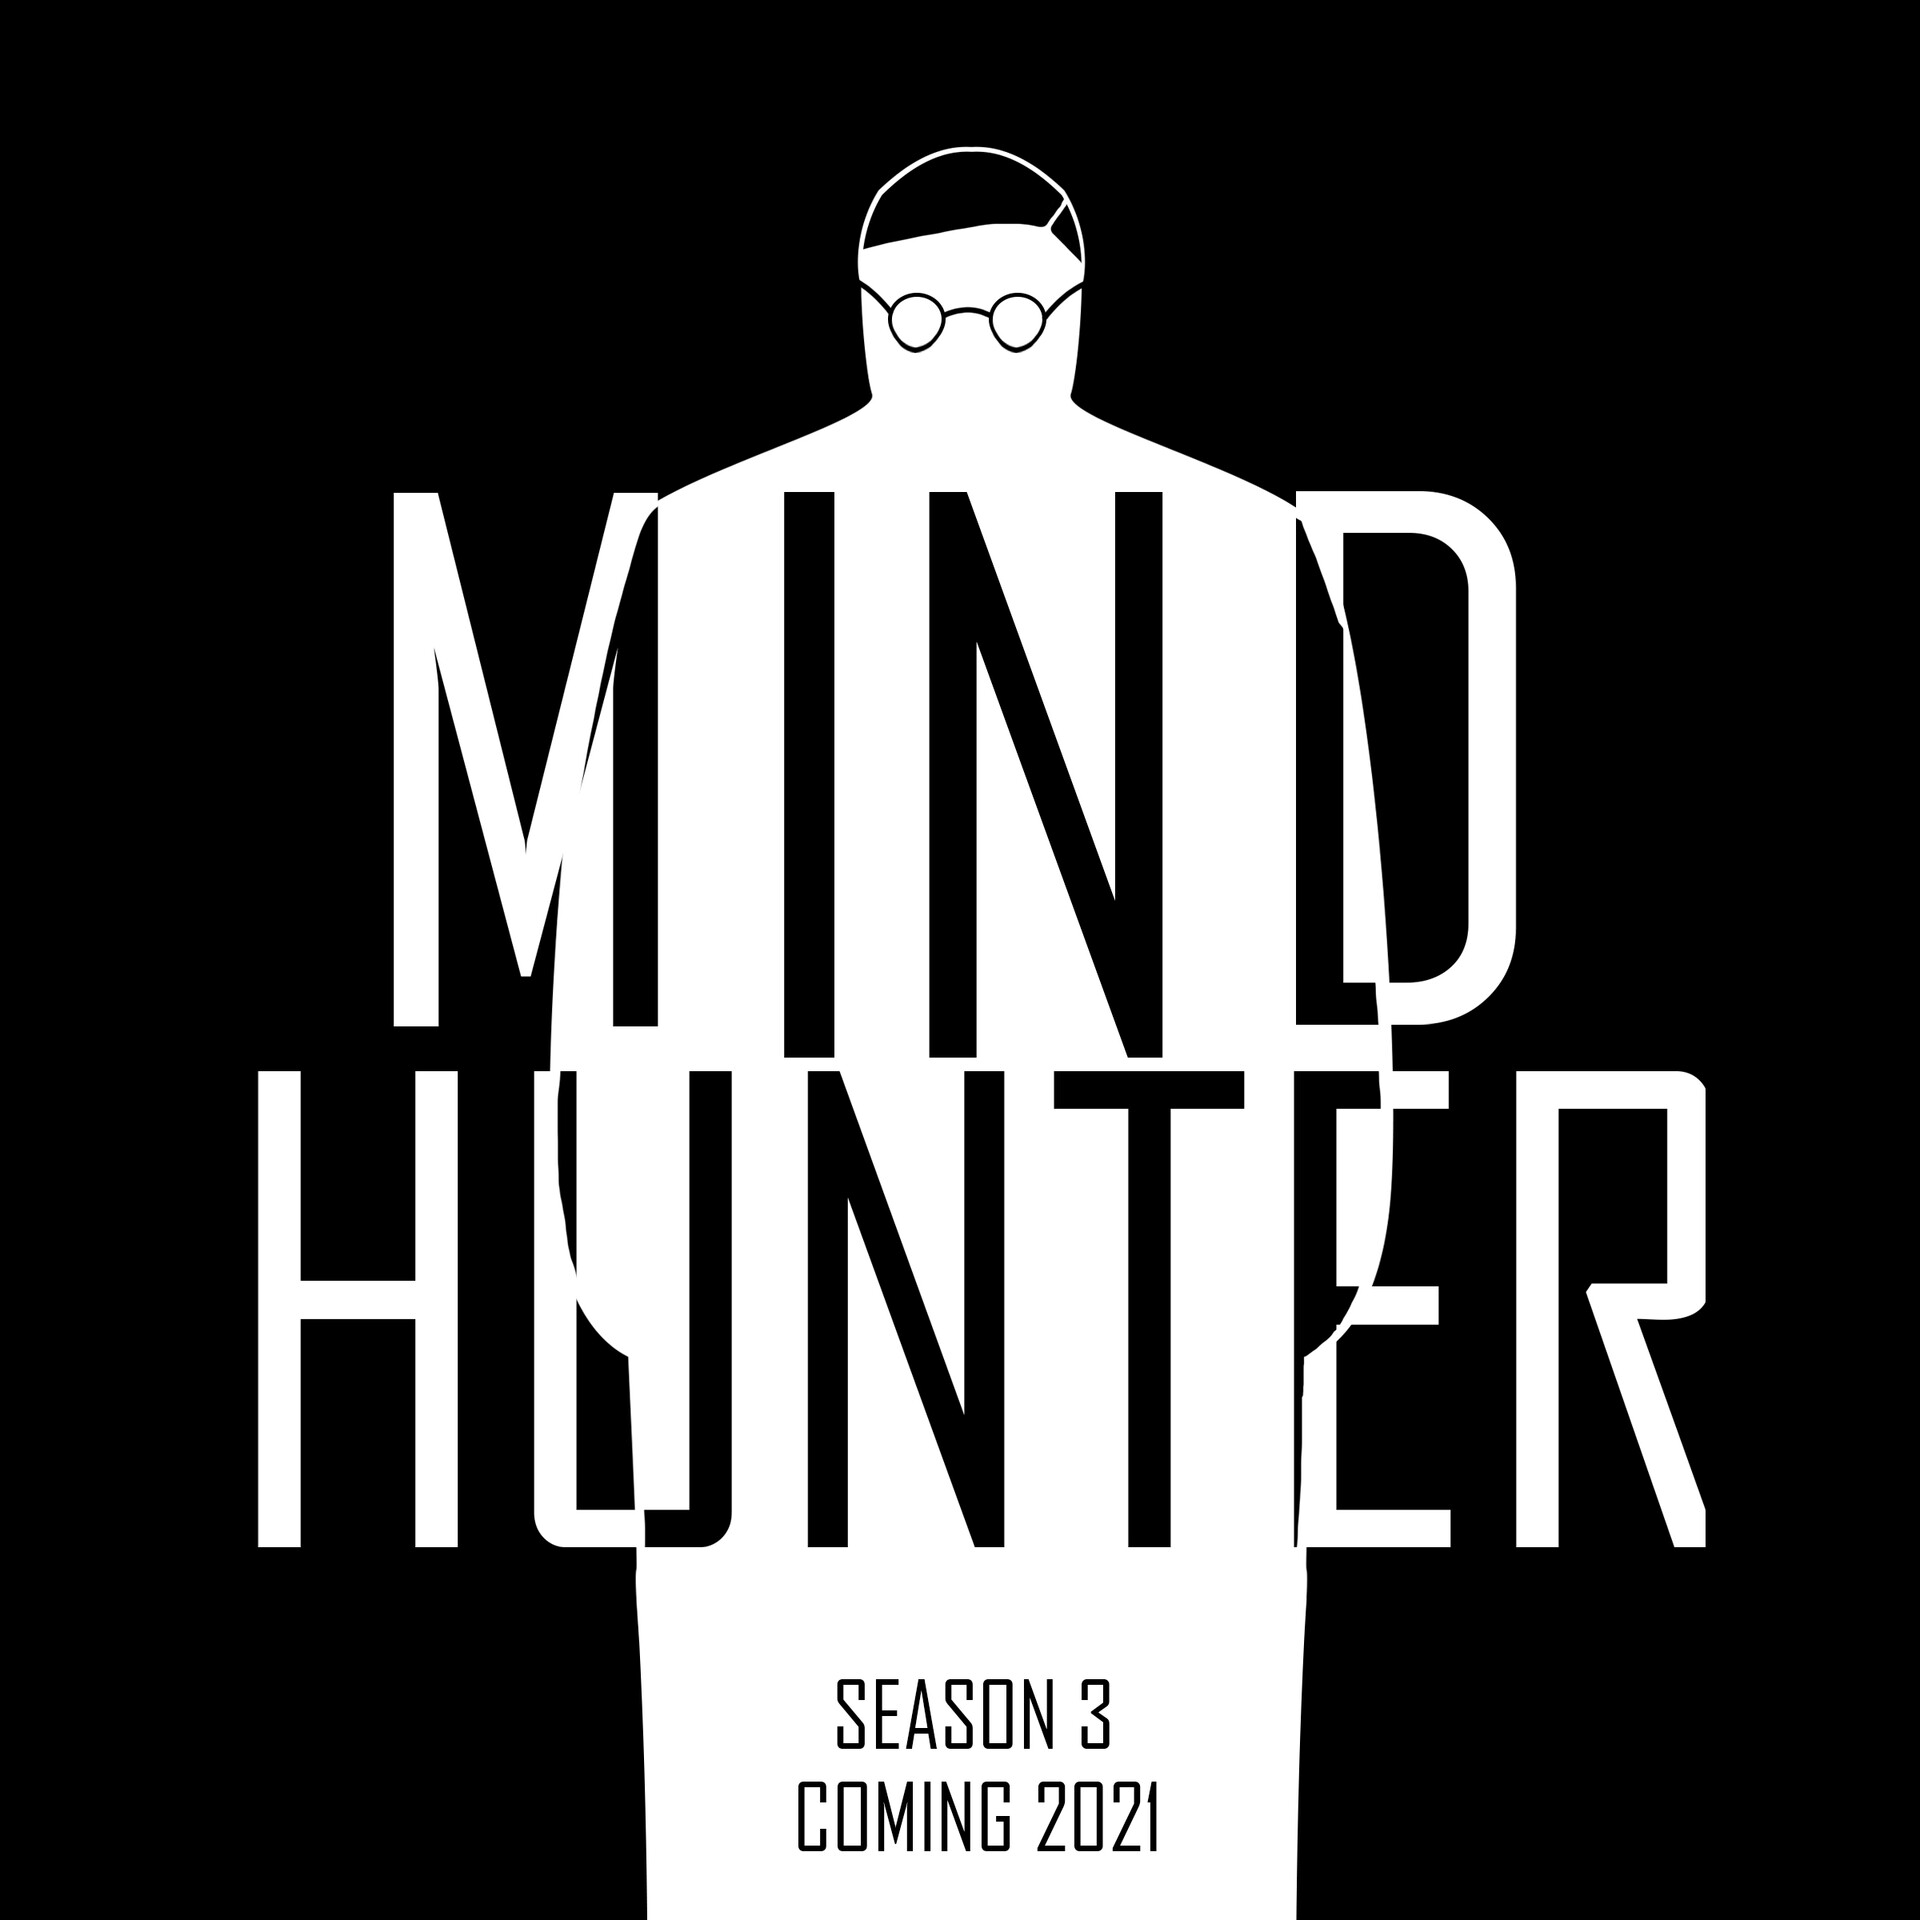 ArtStation Mindhunter Season 3 Poster